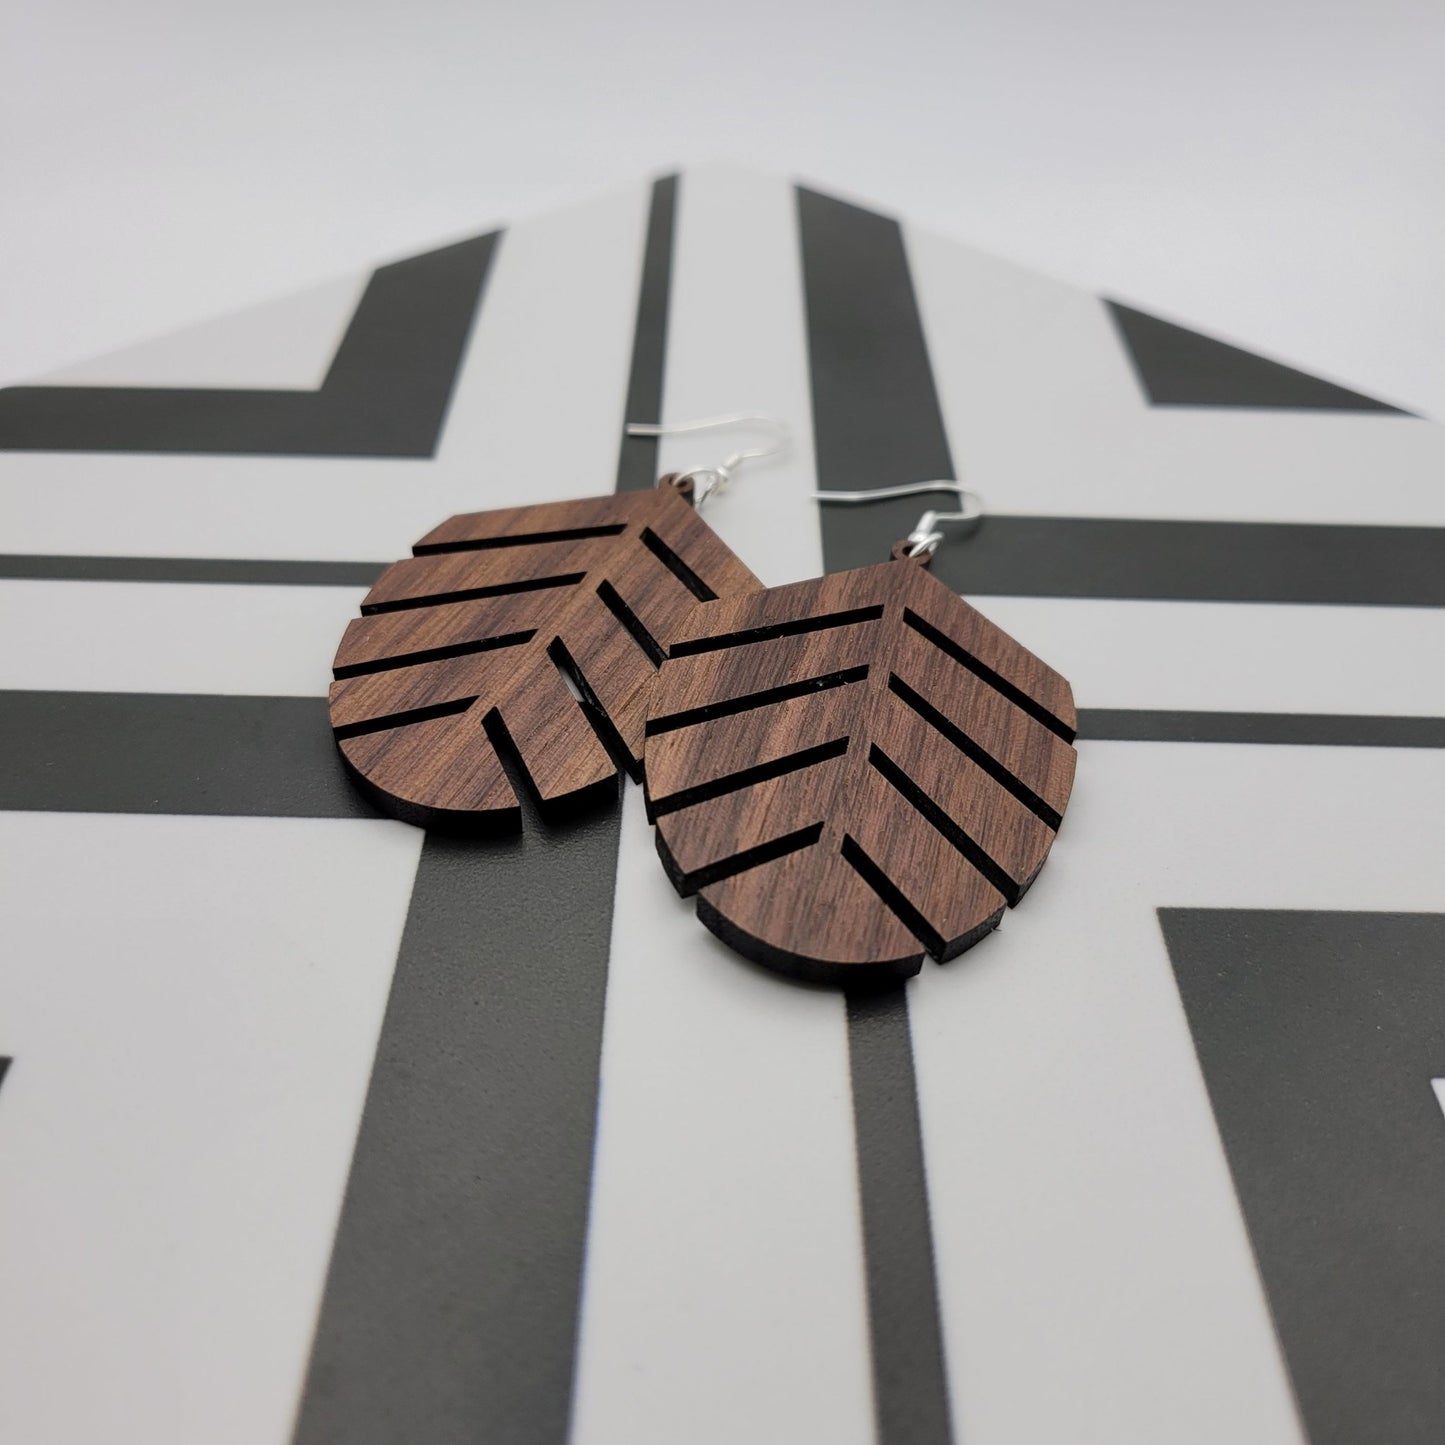 Aura Wood Earrings - 4 Arrows Creations